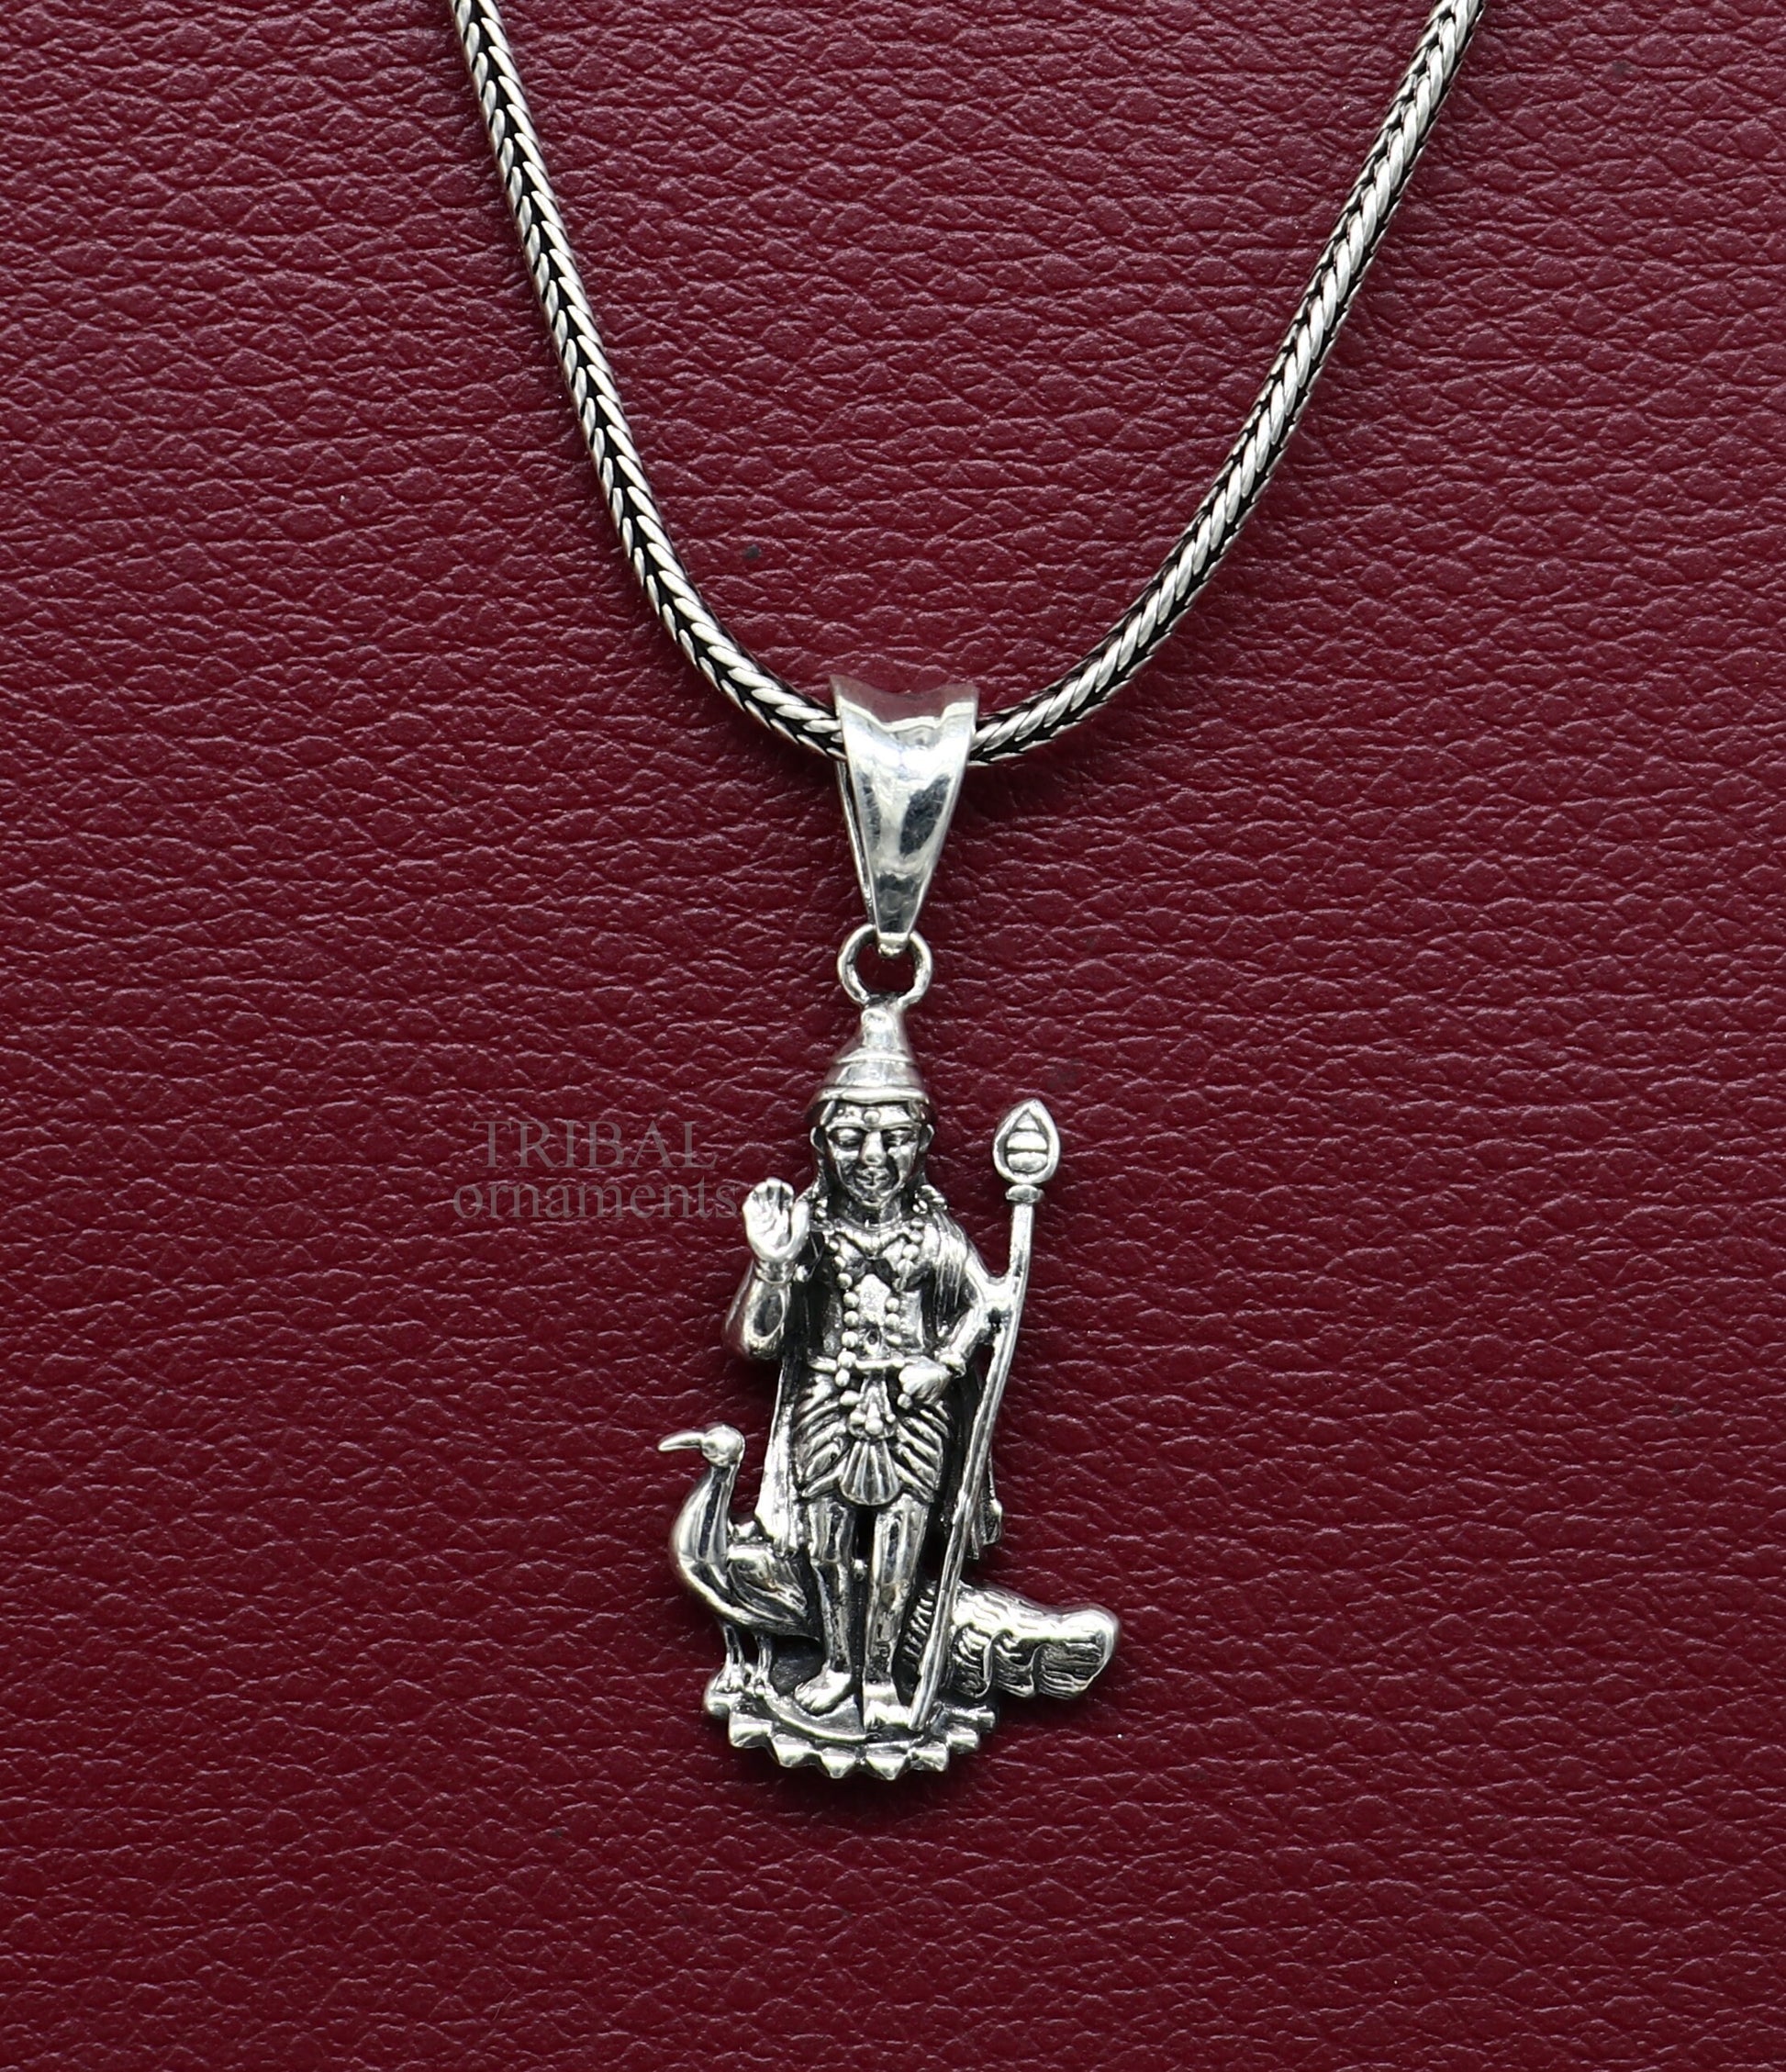 925 sterling silver Divine lord murugan KARTIKEYA pendant, excellent vintage designer silver handmade elegant pendant jewelry ssp1614 - TRIBAL ORNAMENTS